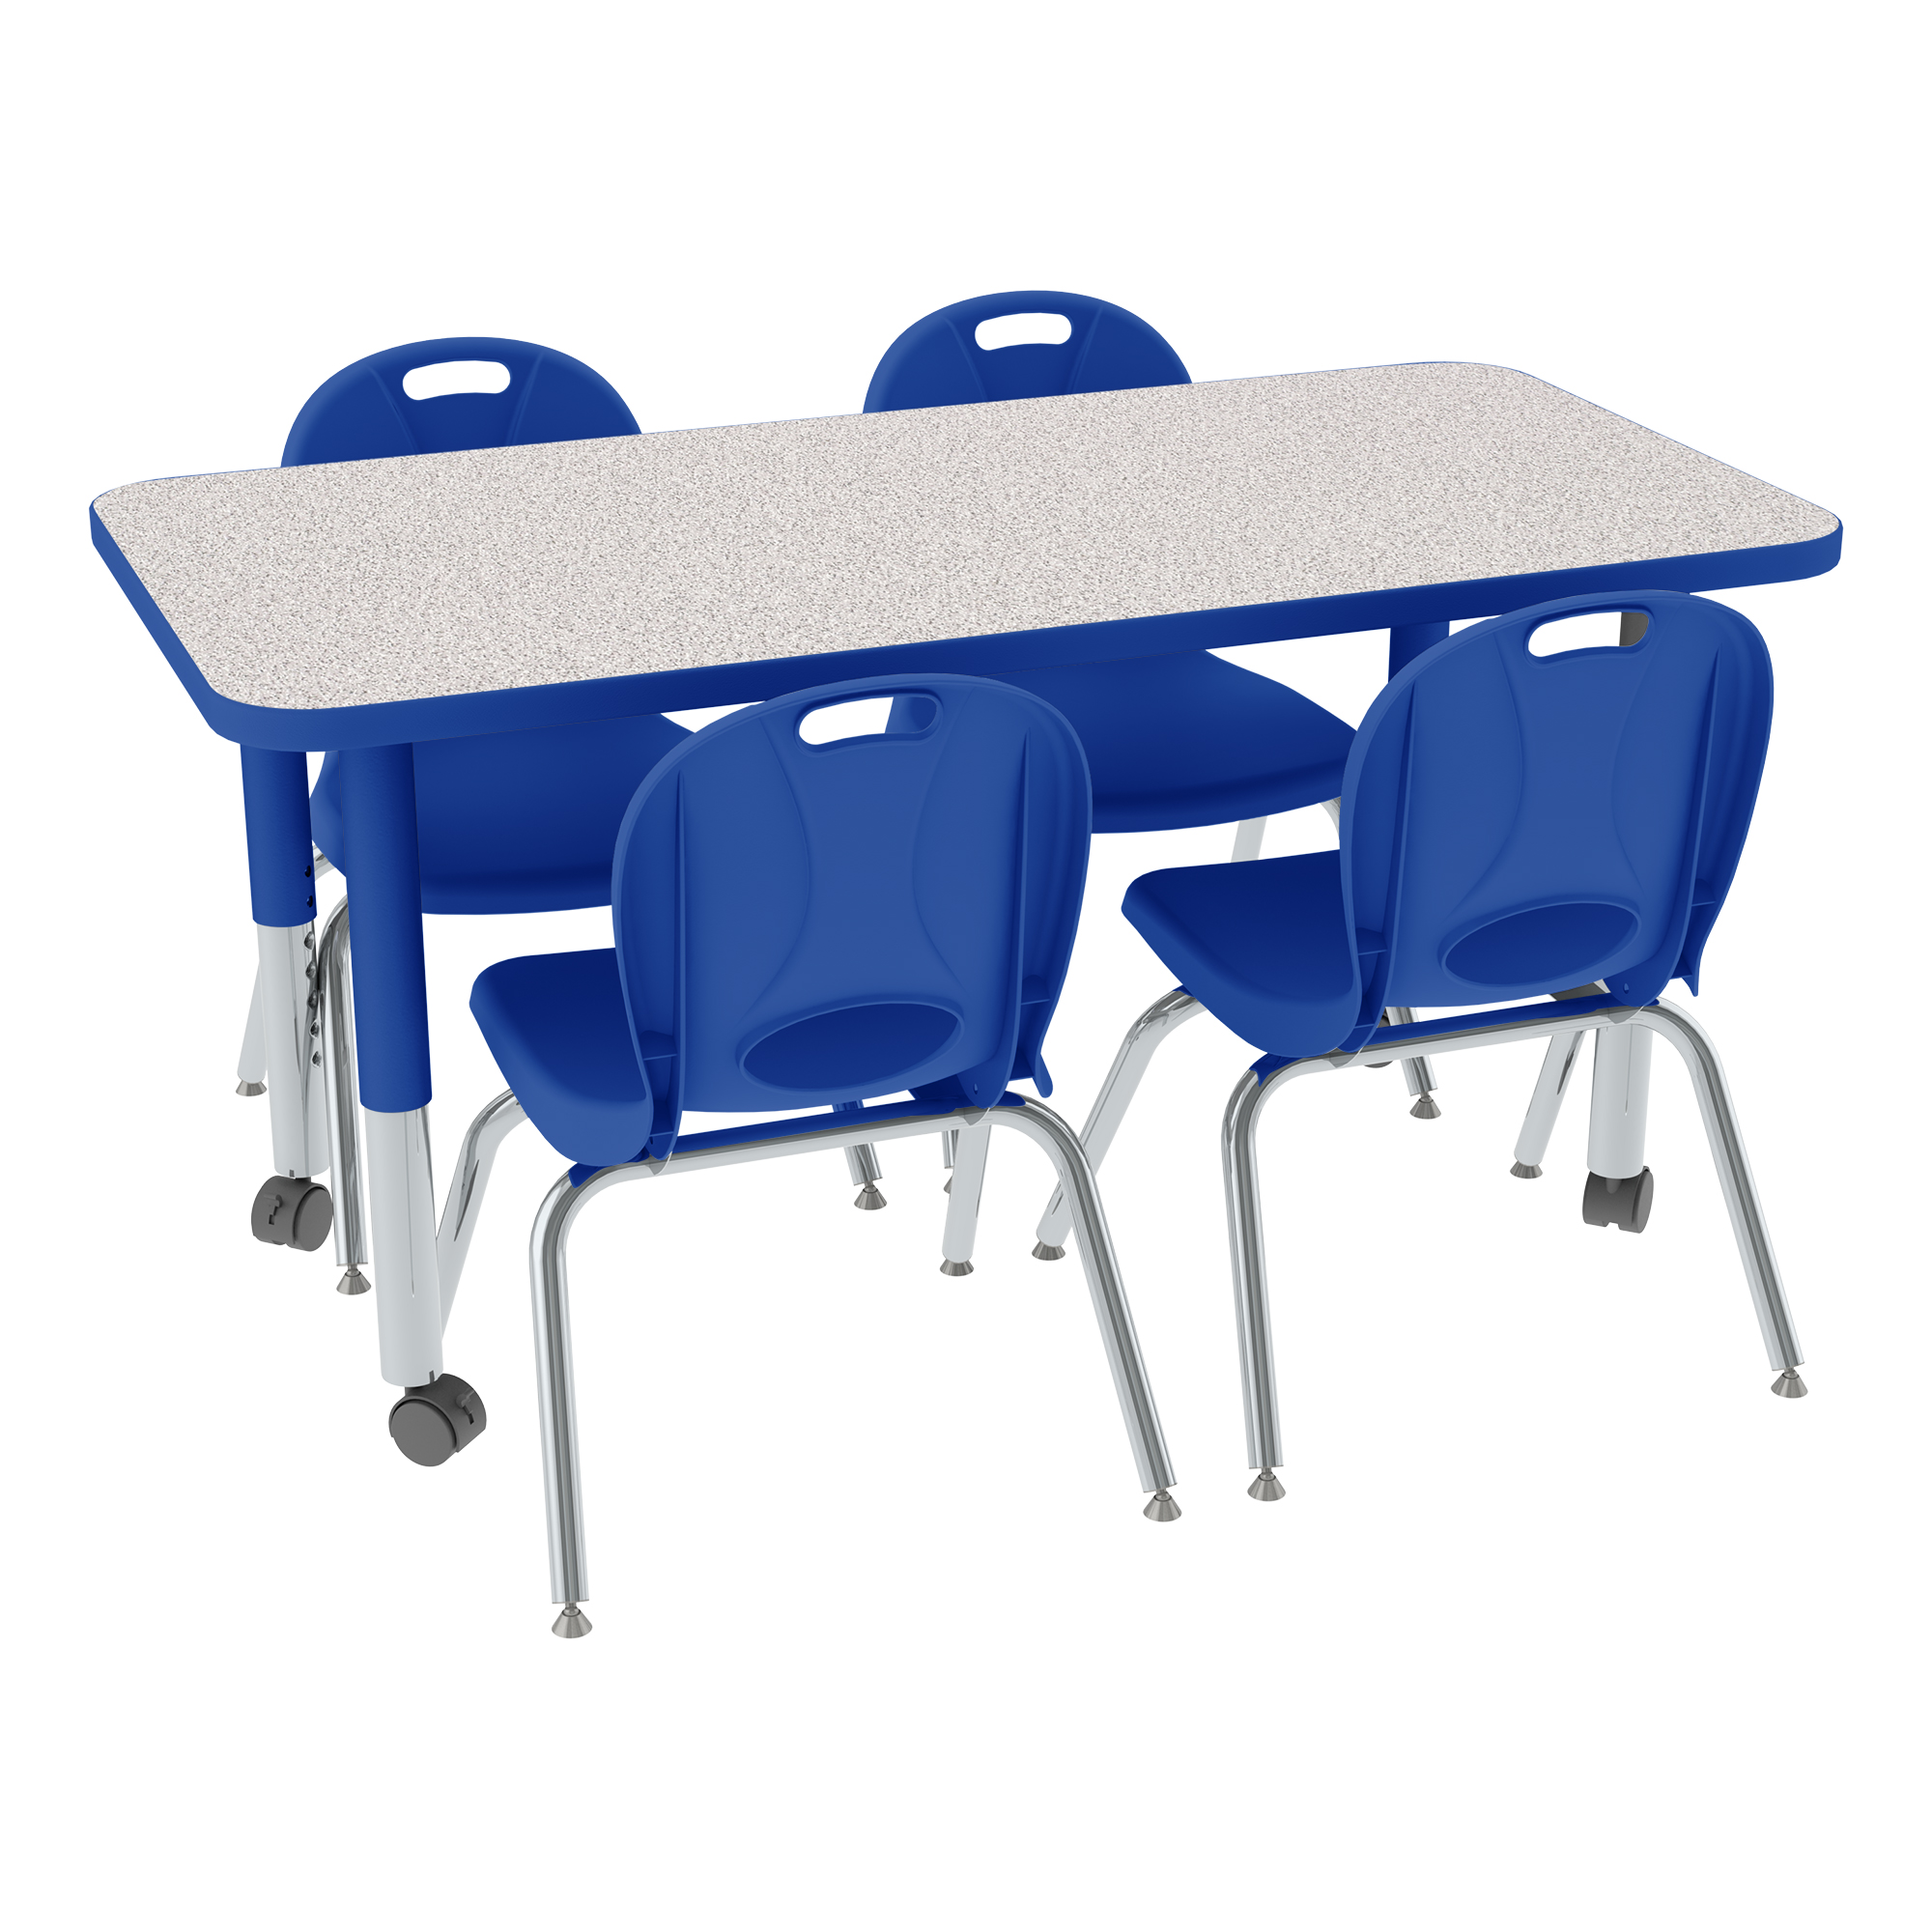 Sprogs Rectangle Adjustable Height Preschool Table Chair Set 24